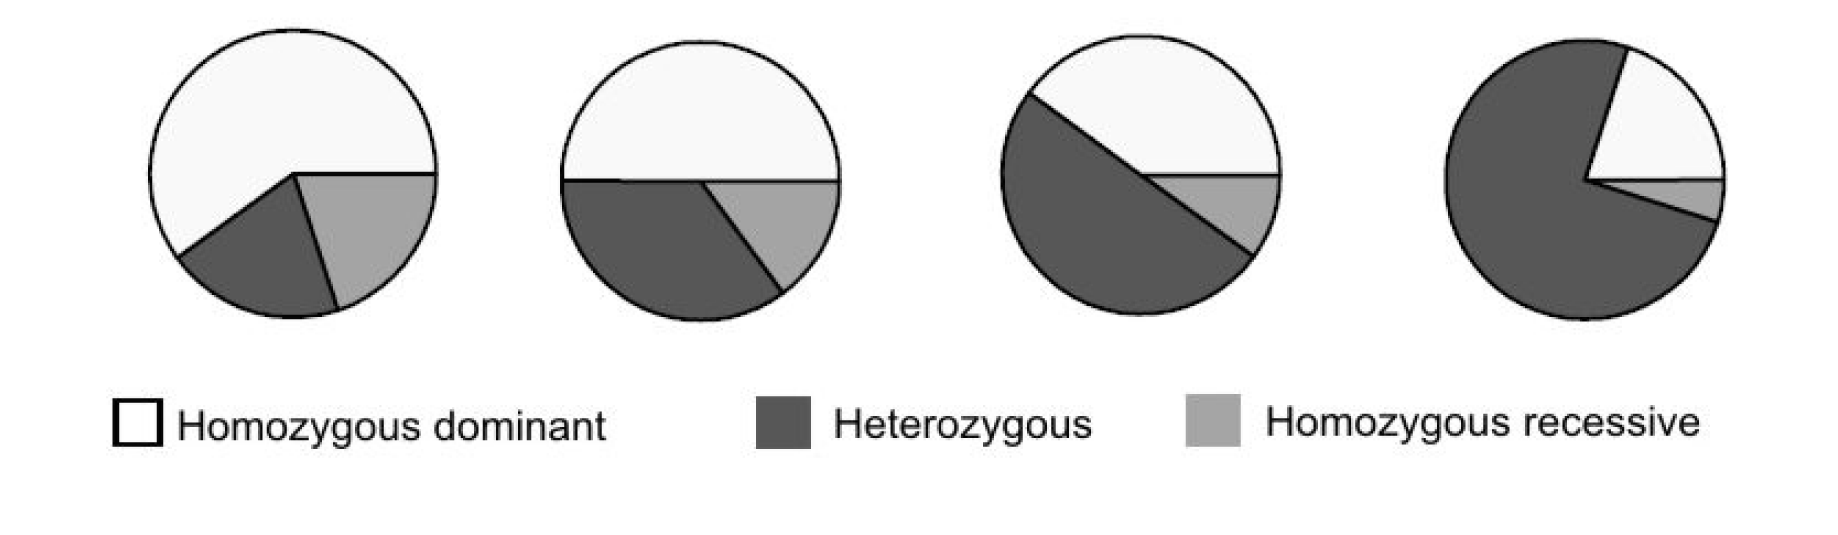 The comparative population genetics of Neisseria meningitidis and Neisseria gonorrhoeae [PeerJ]